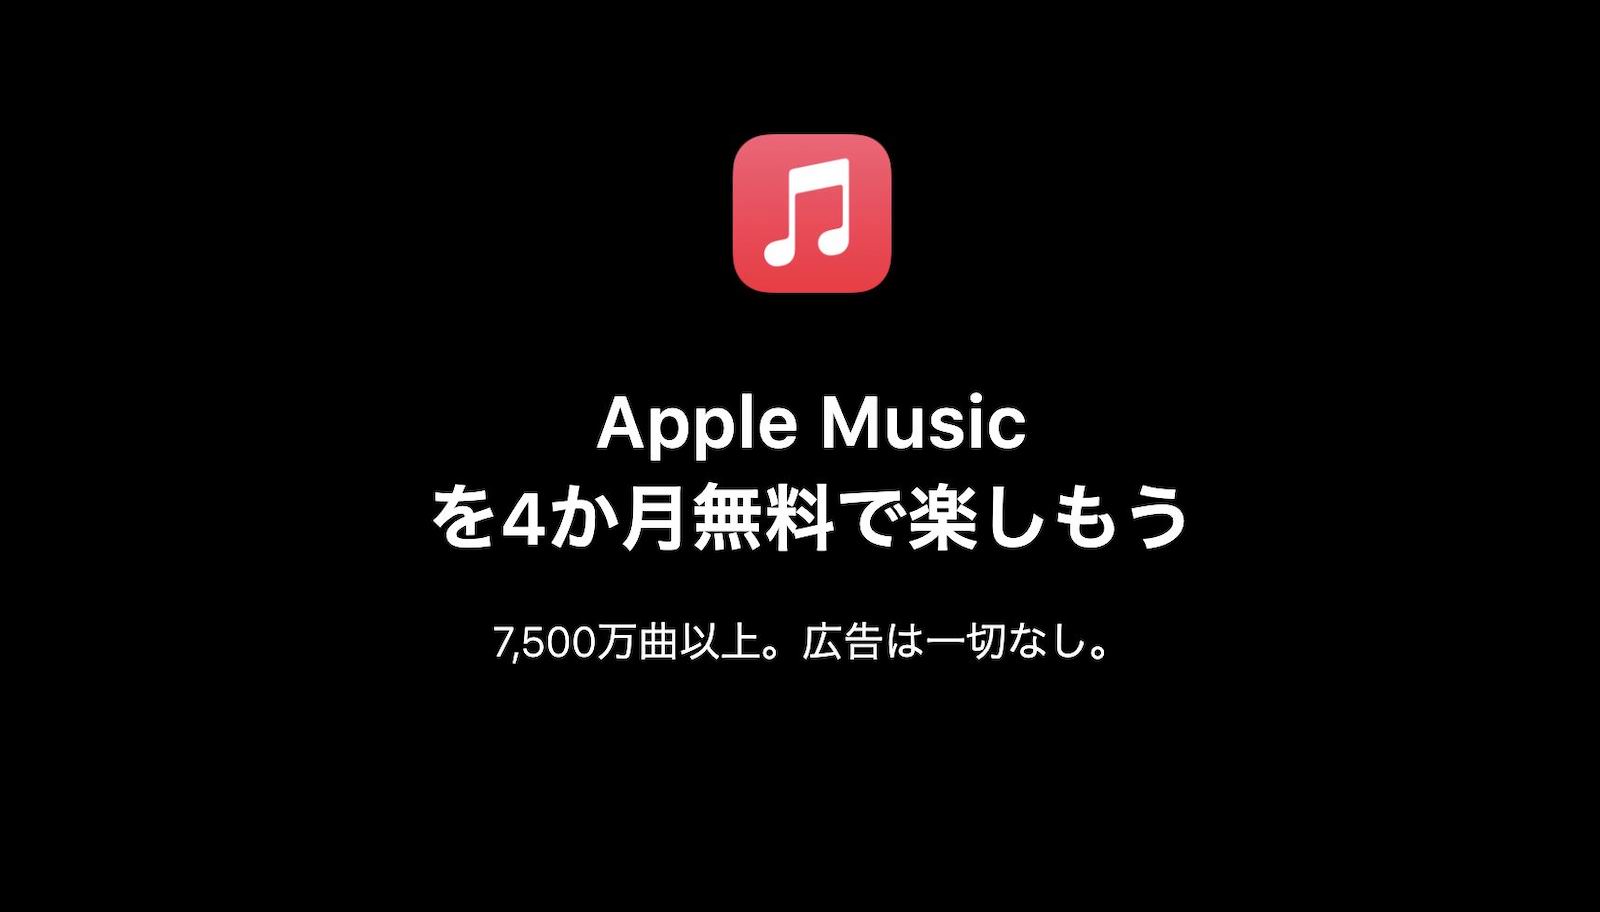 Apple Music 1 month free